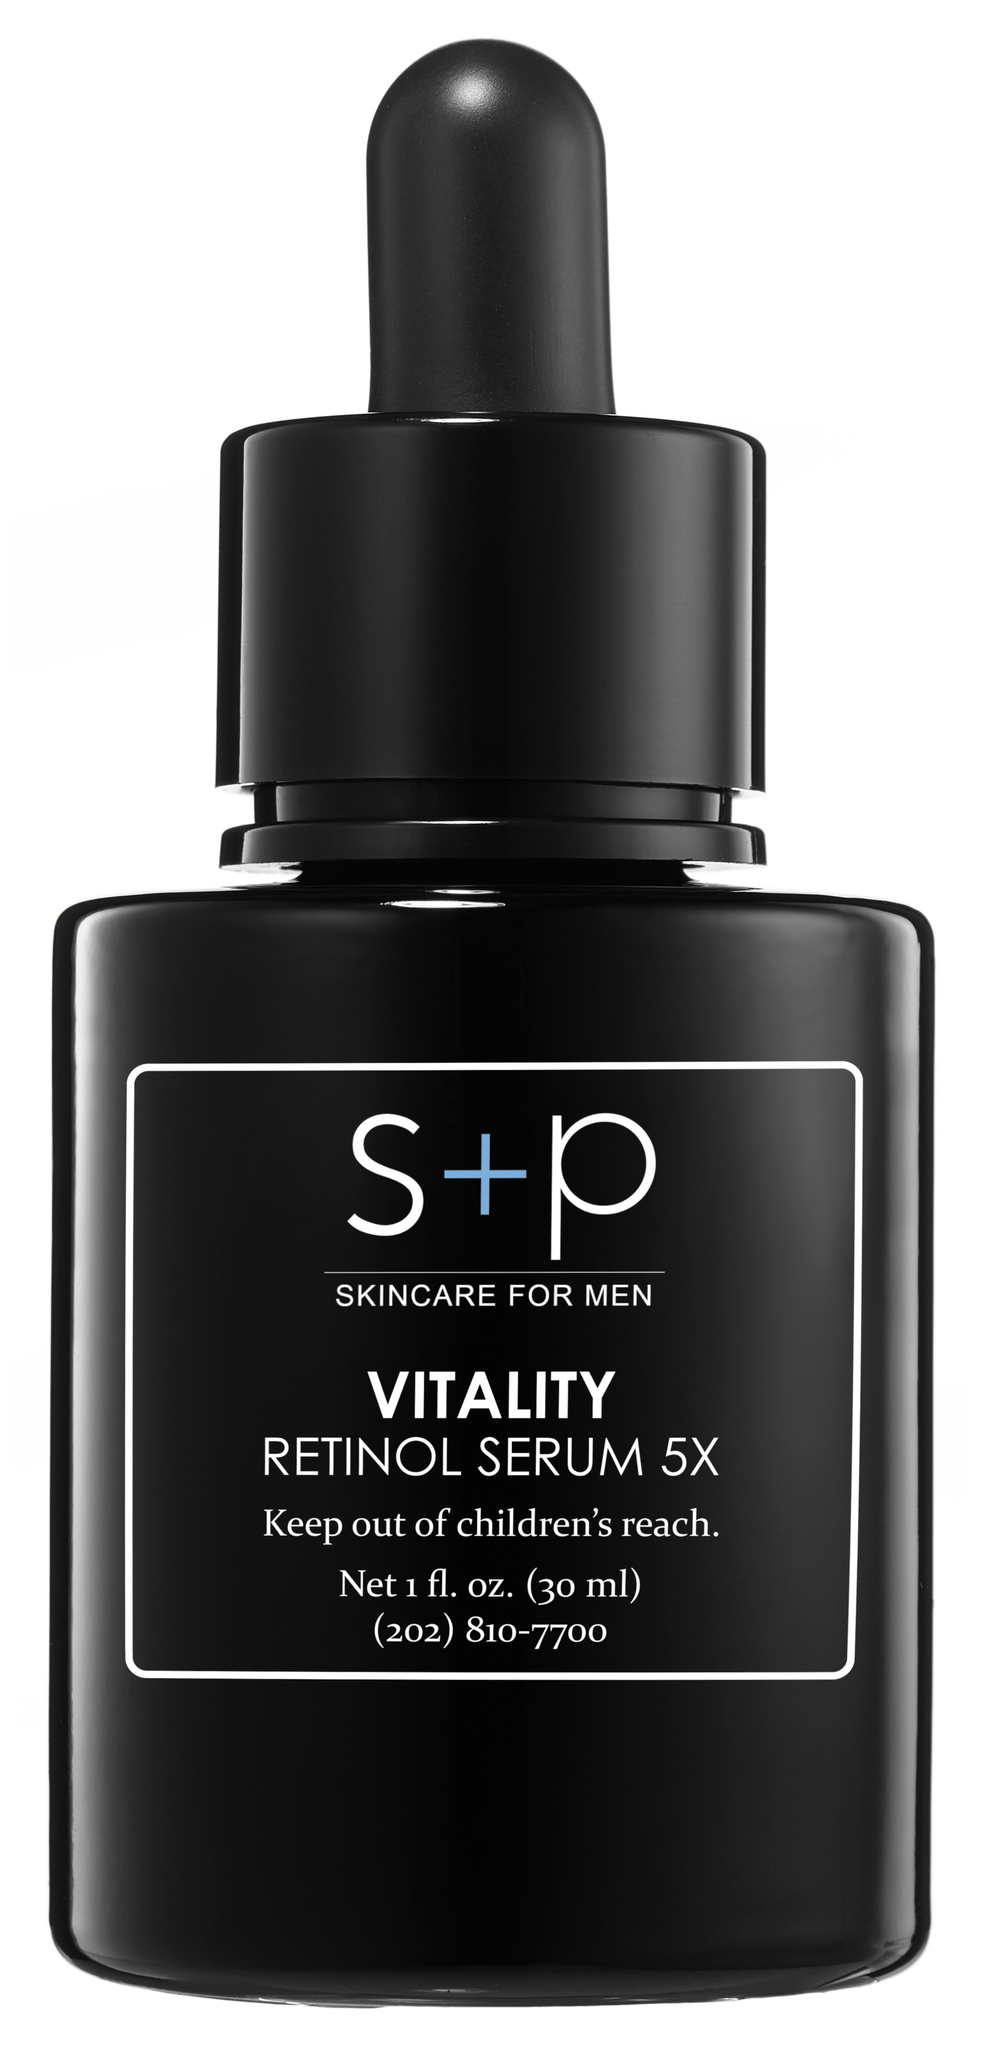 Skincare for men - Vitality Retinol Serum 5x